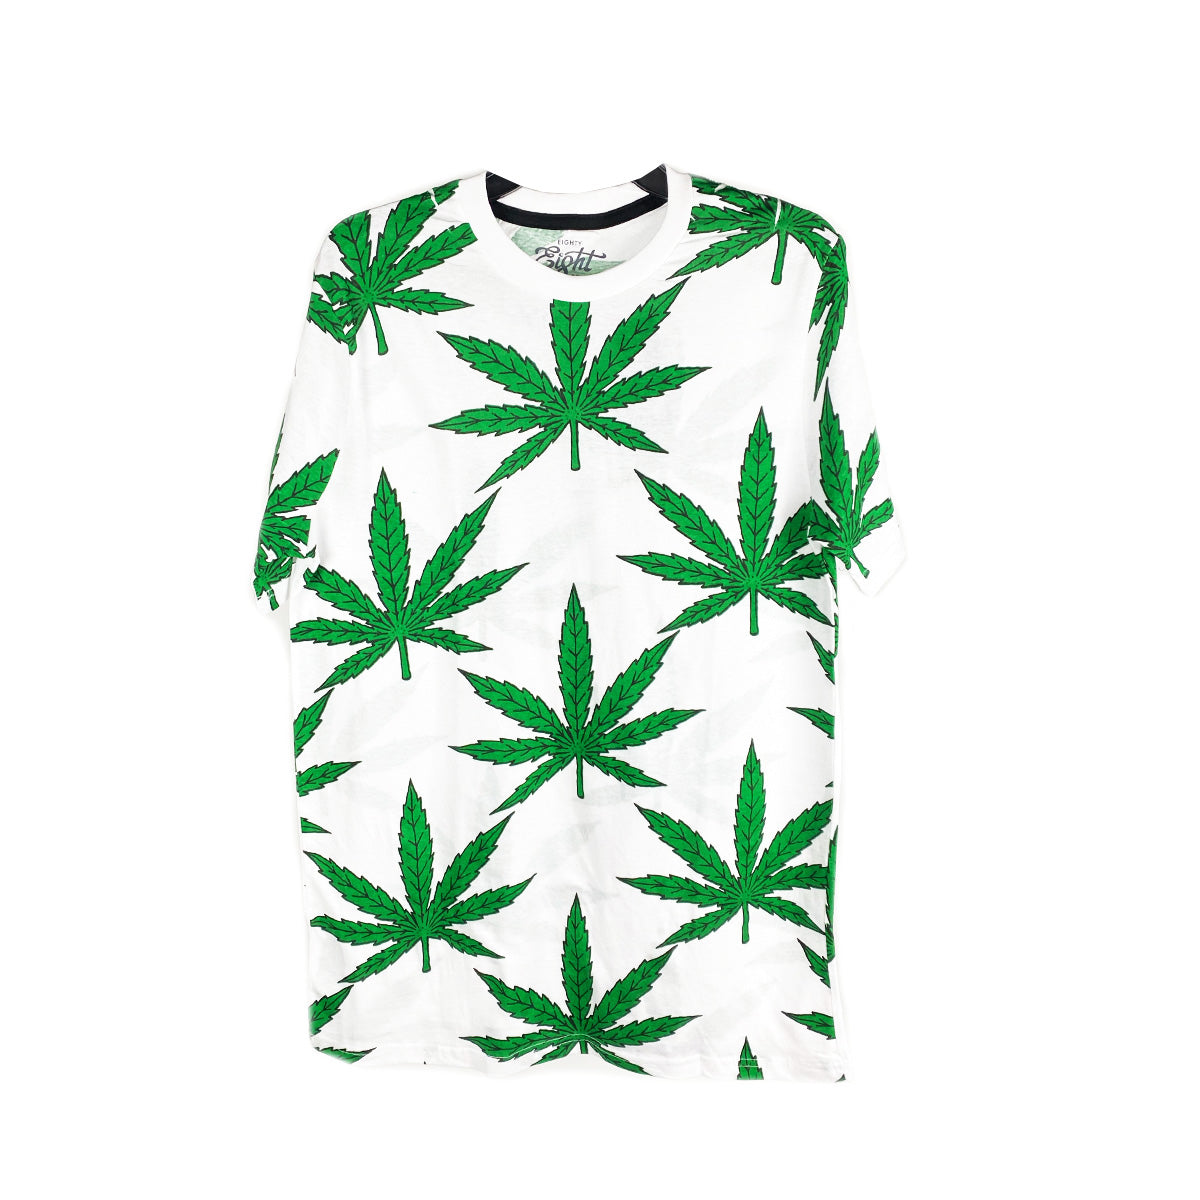 White Green Cannabis Leaf 100% Cotton T-Shirt, Pack of 6 Units 1S, 2M, 2L, XL